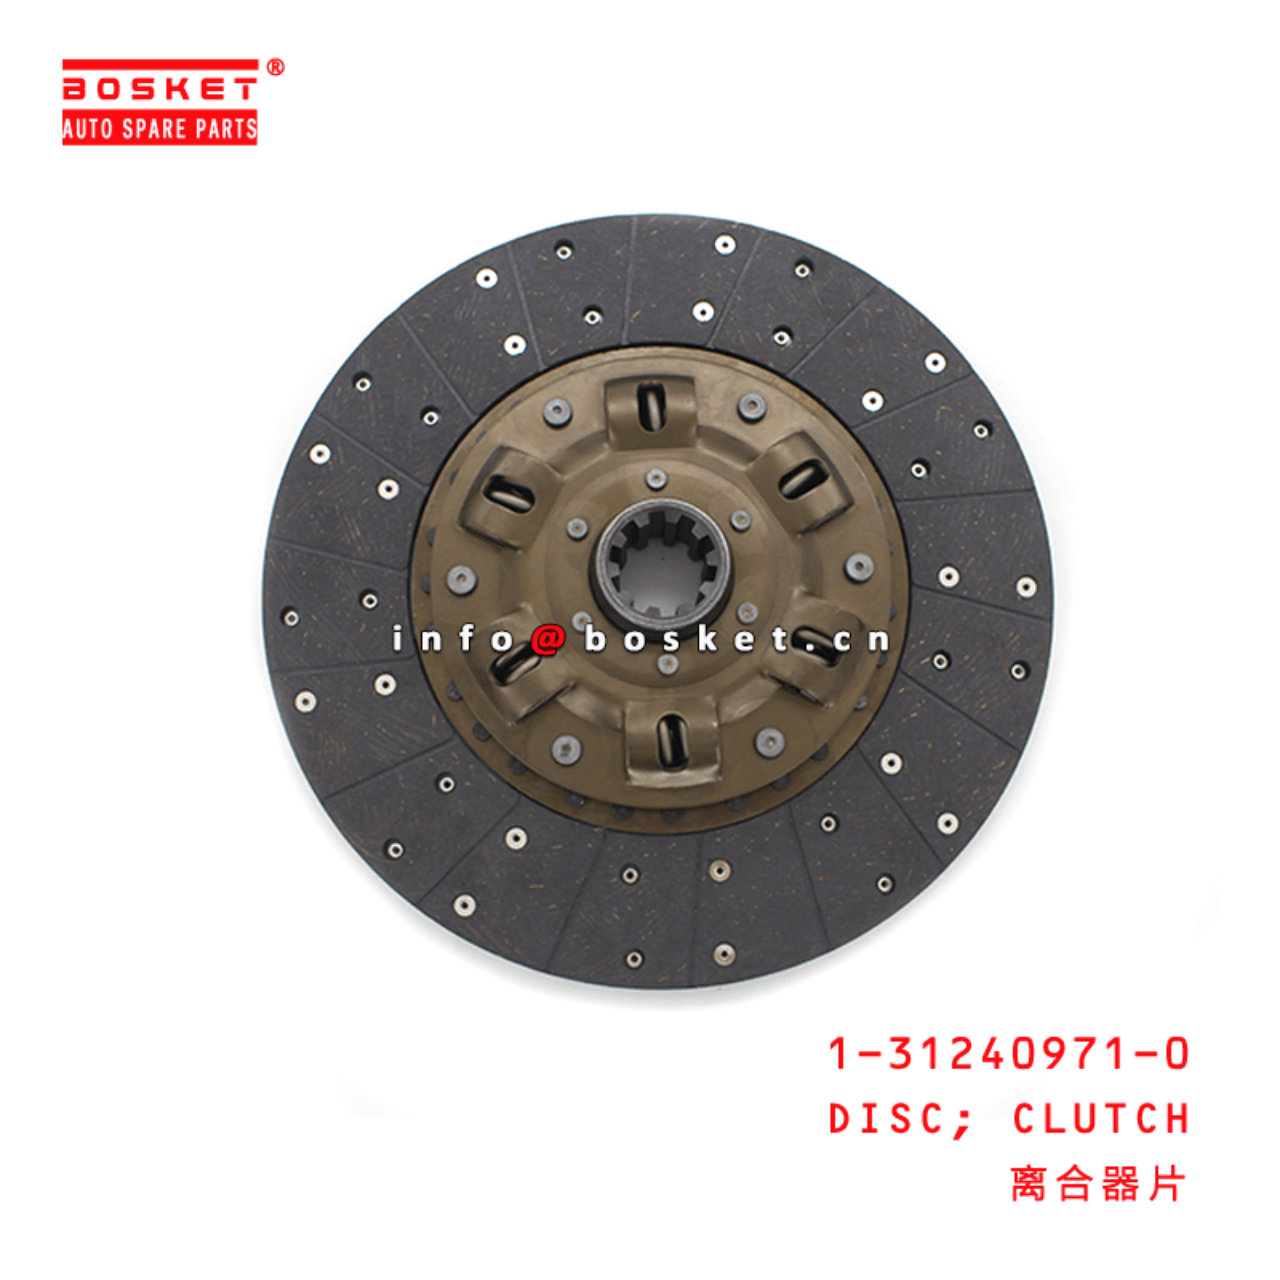 1-31240971-0 Clutch Disc 1312409710 Suitable for ISUZU F Series Truck 6HH1 